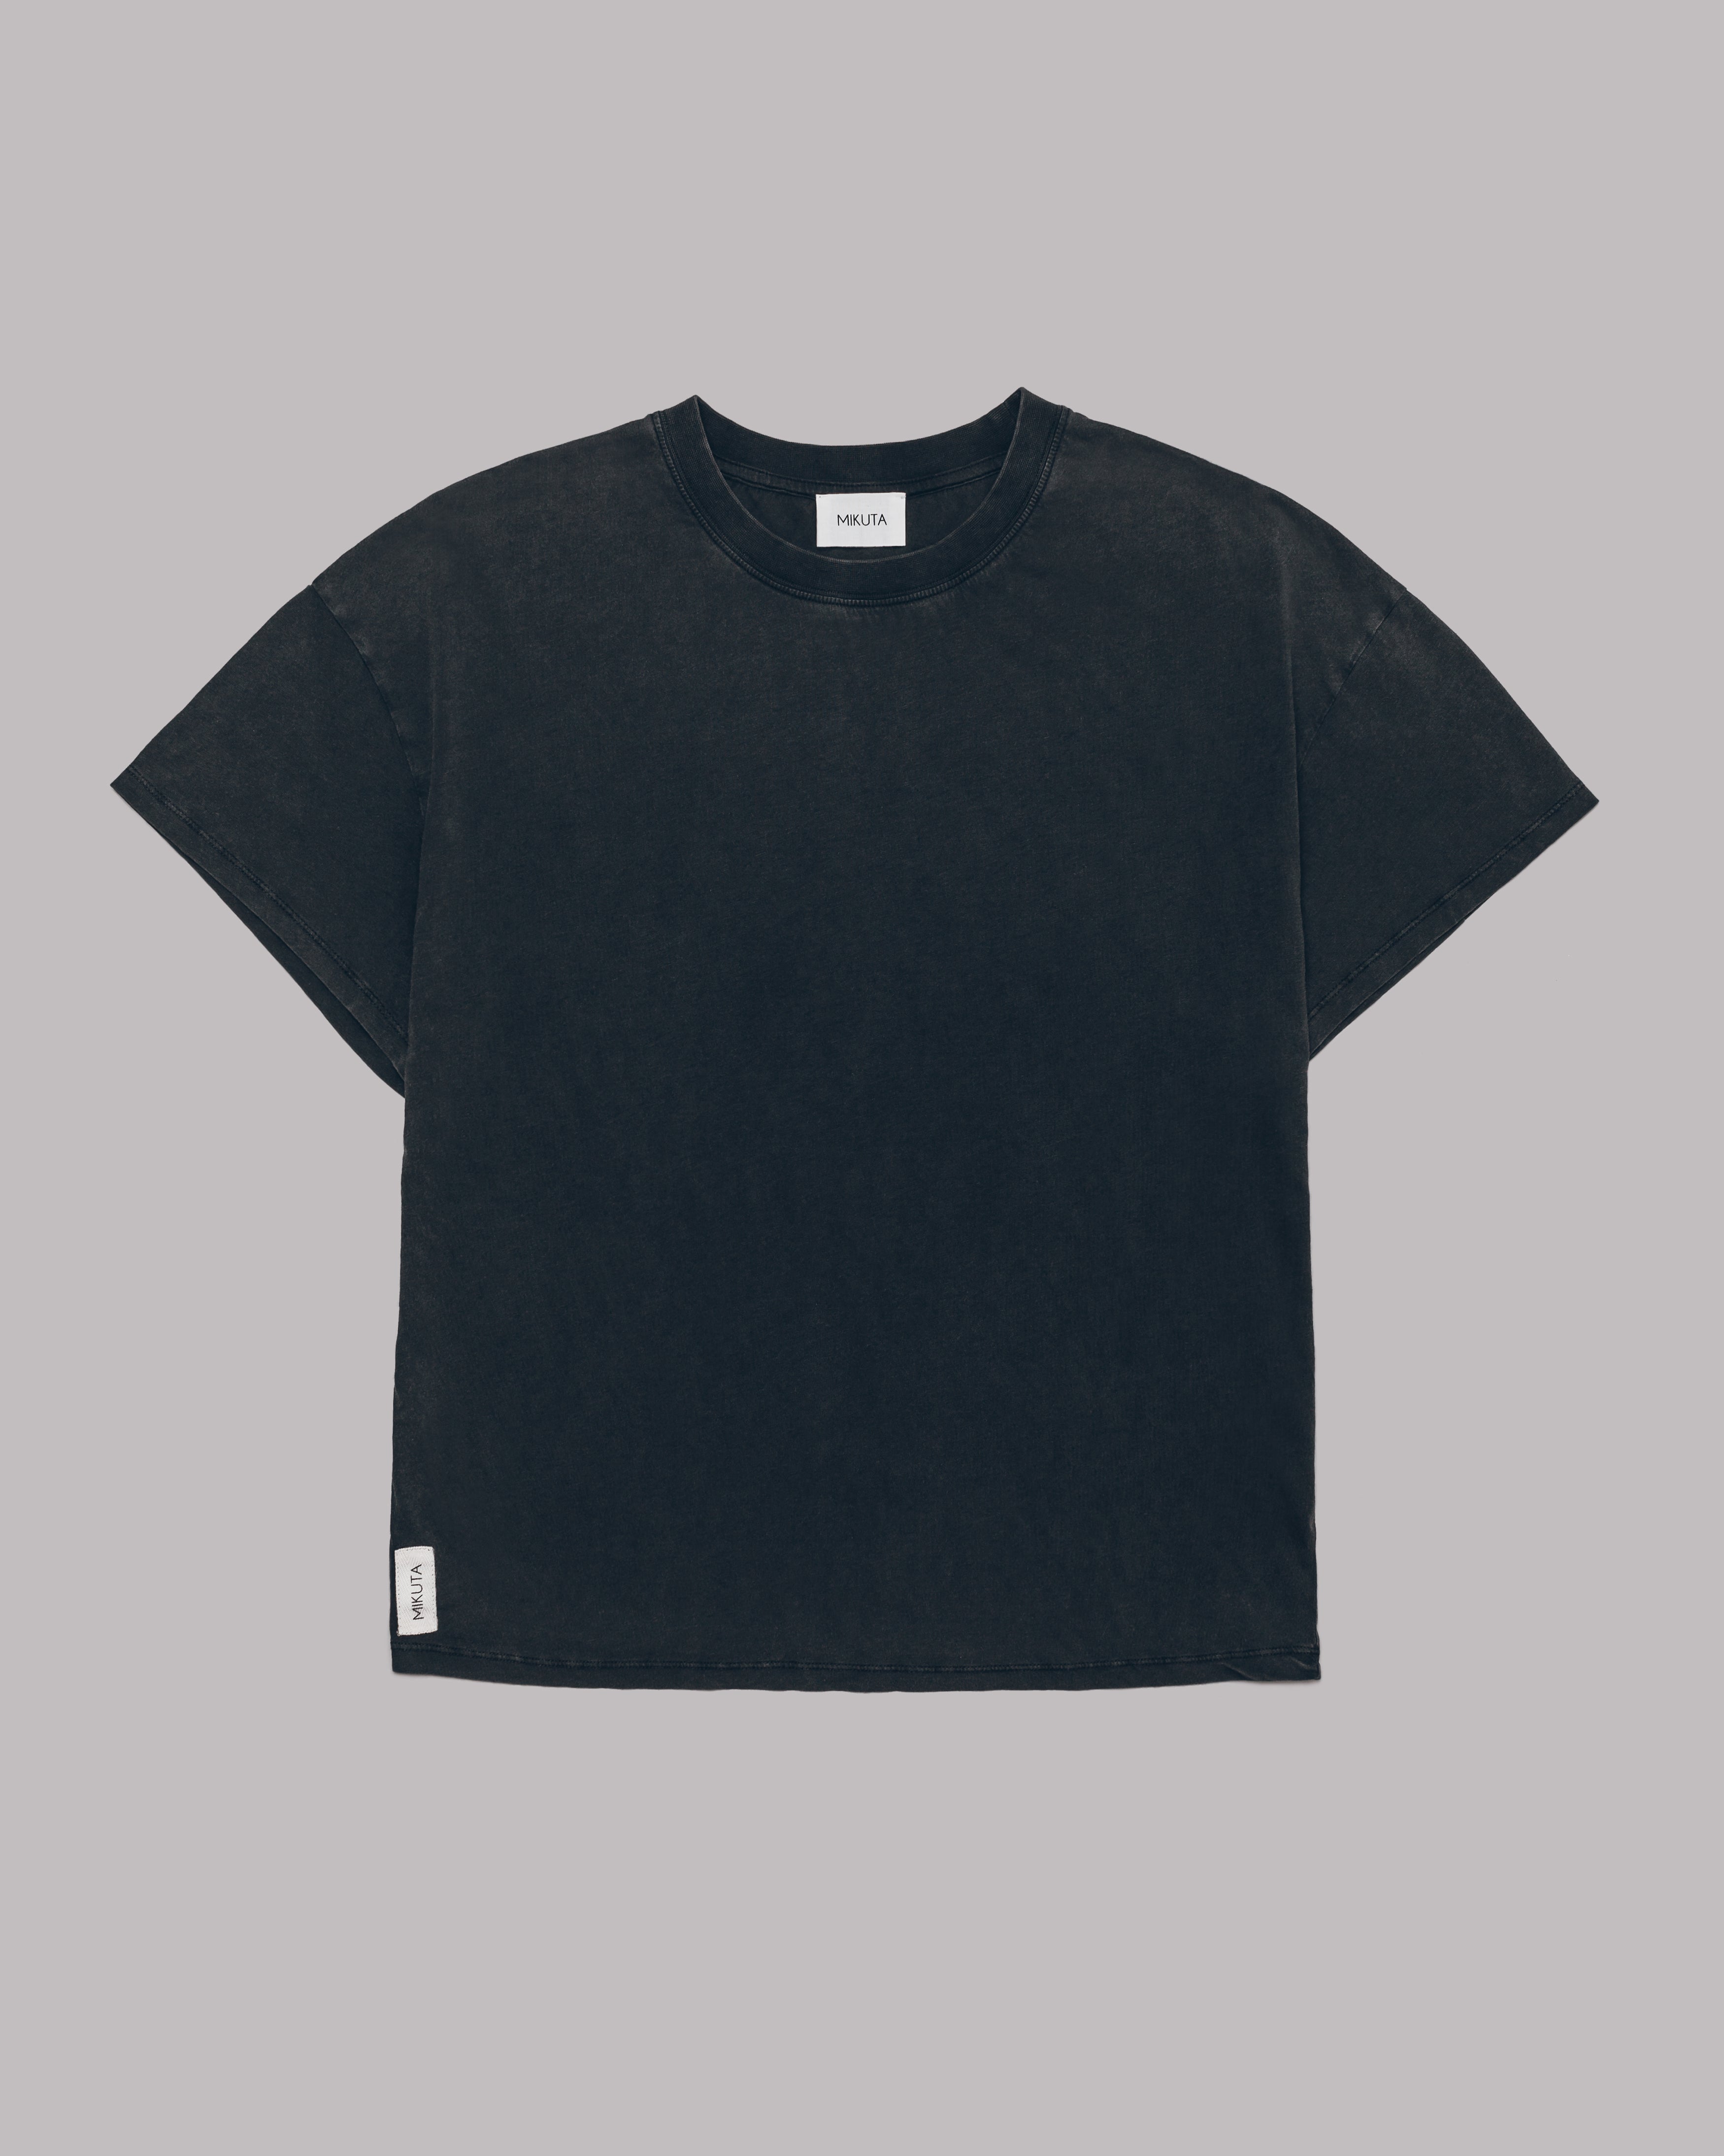 The Black Base T-shirt